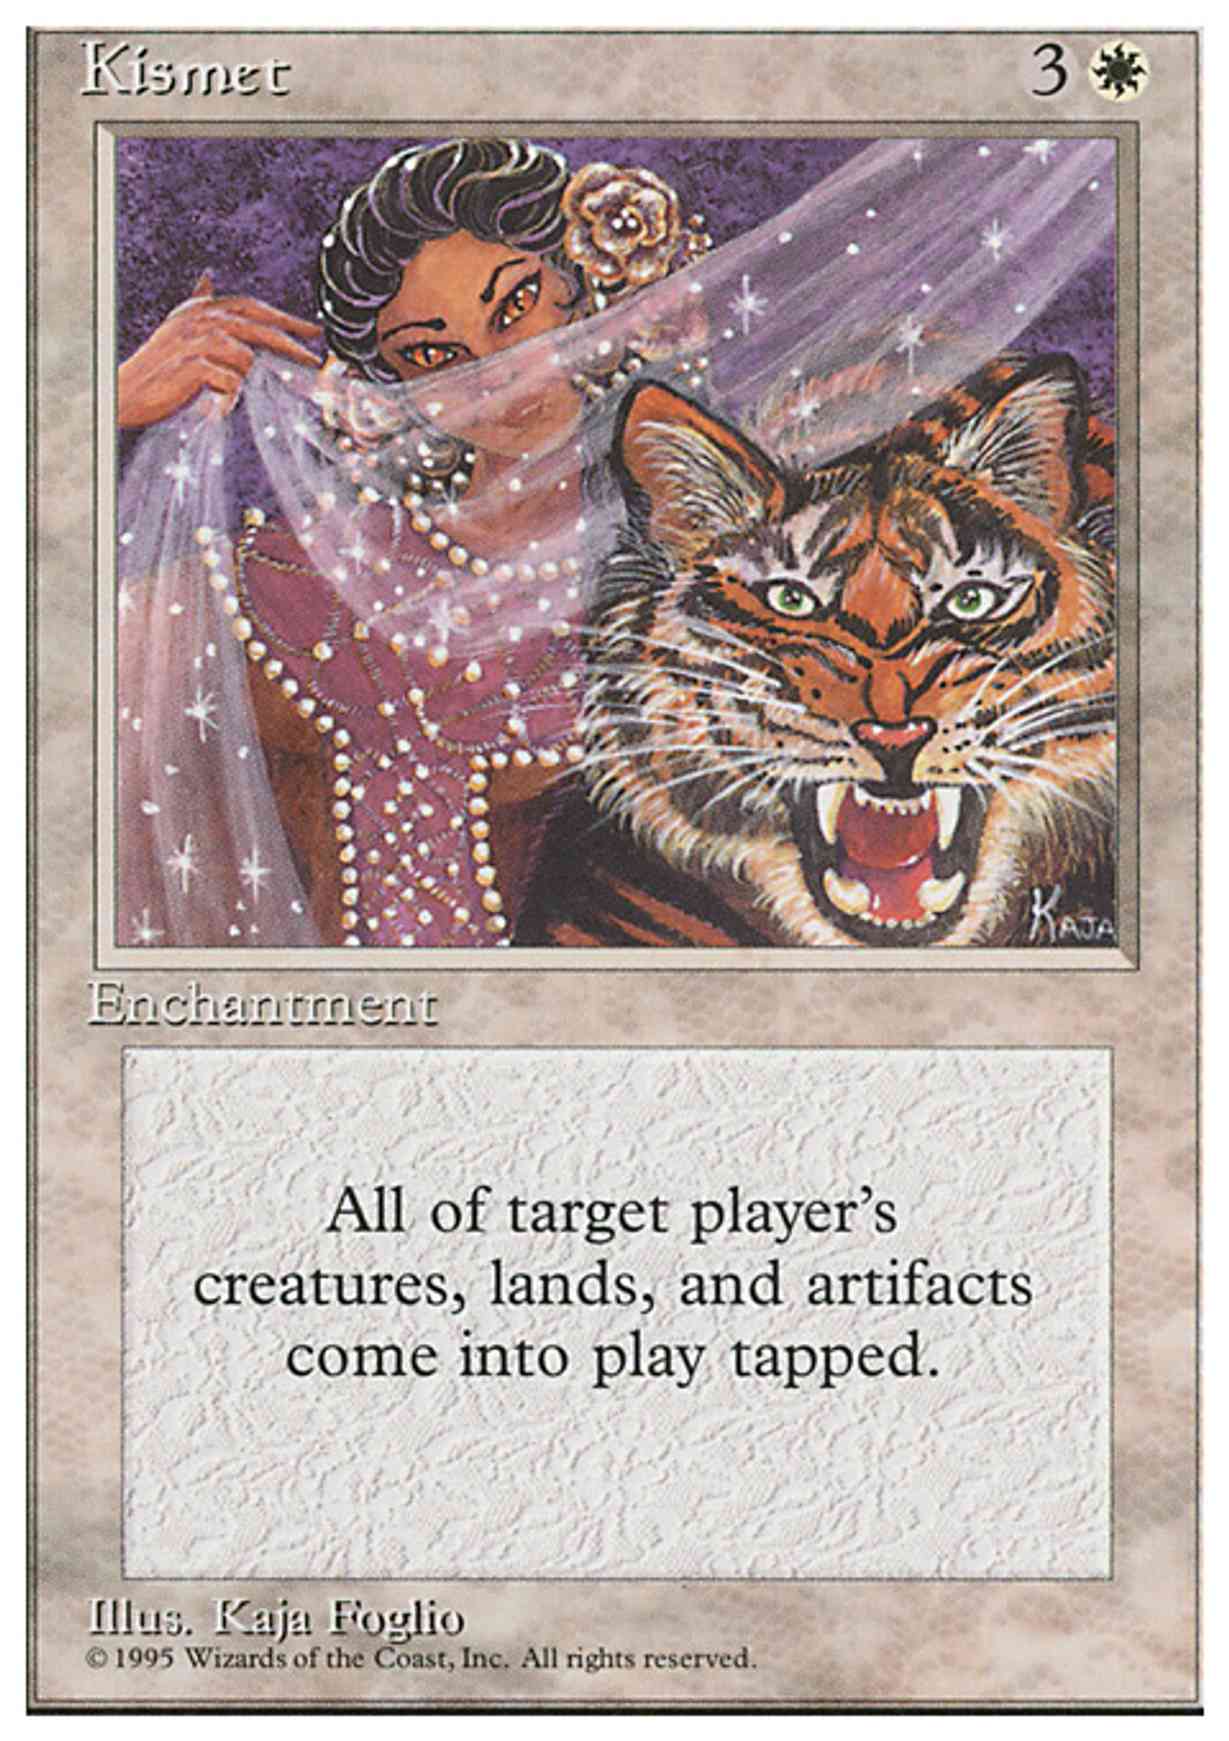 Kismet magic card front